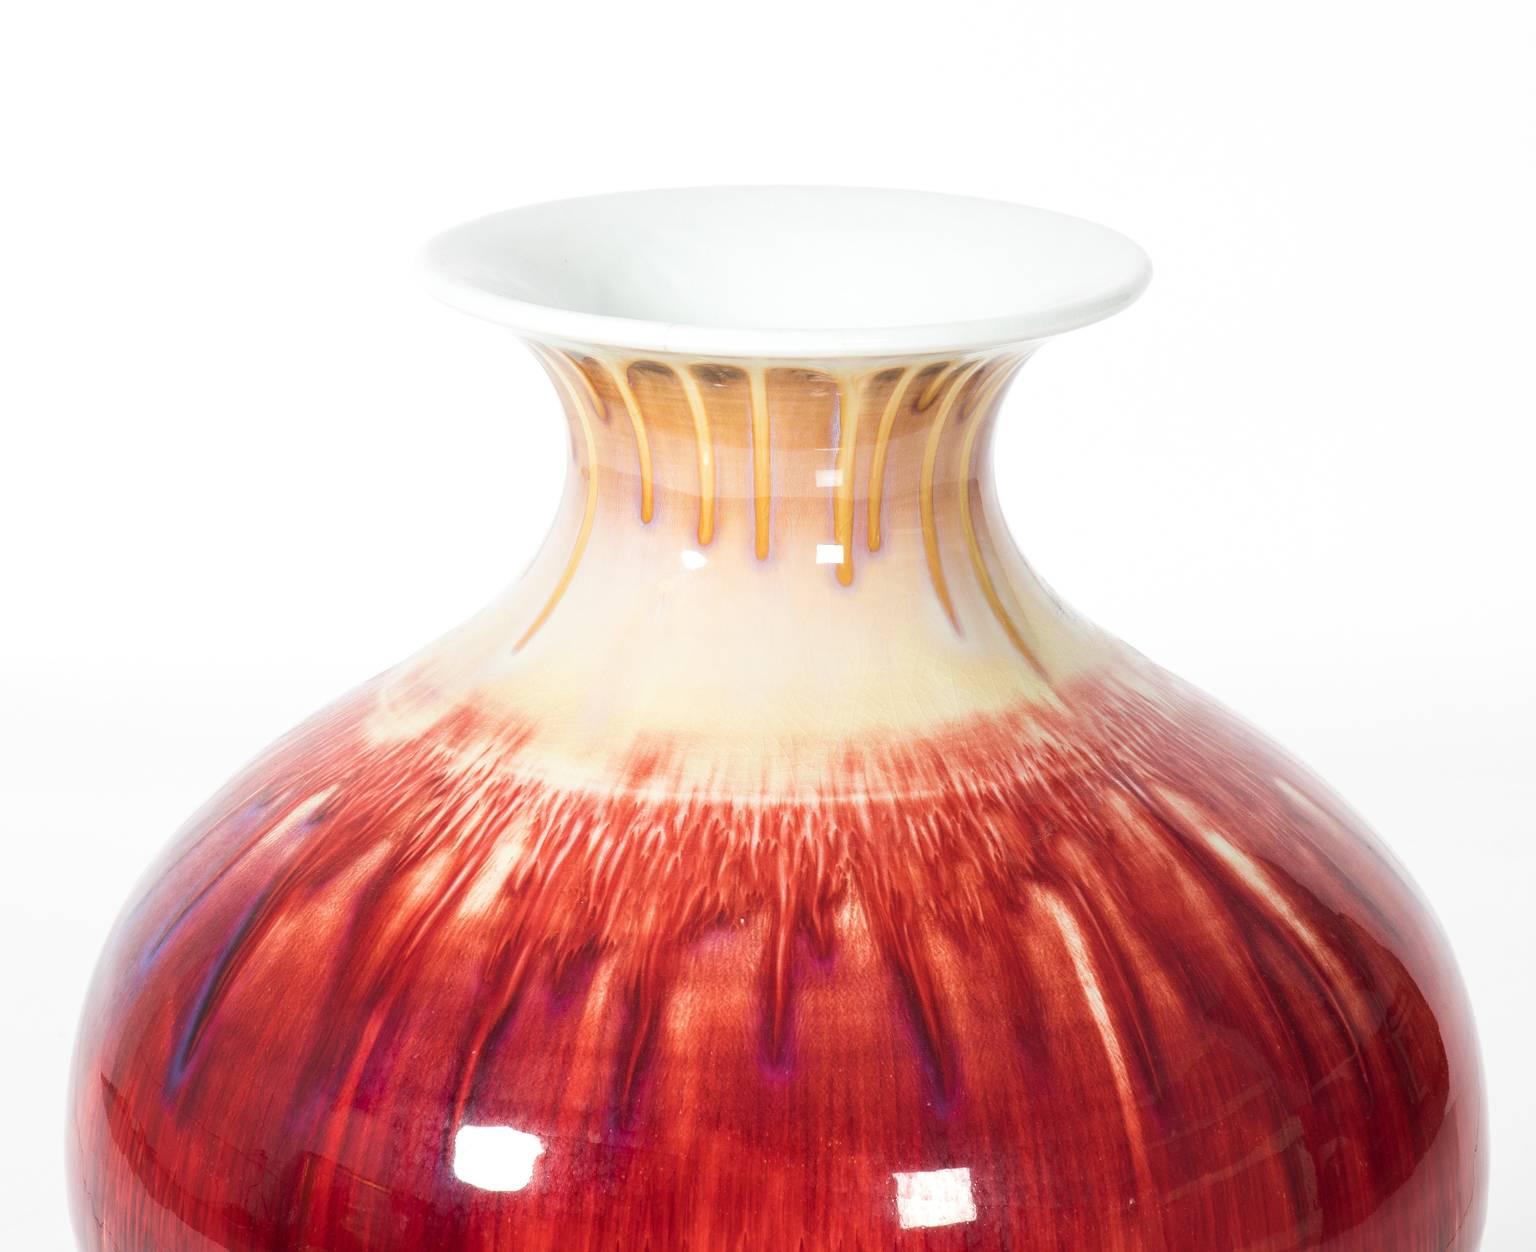 Glazed Midcentury Pottery Vase